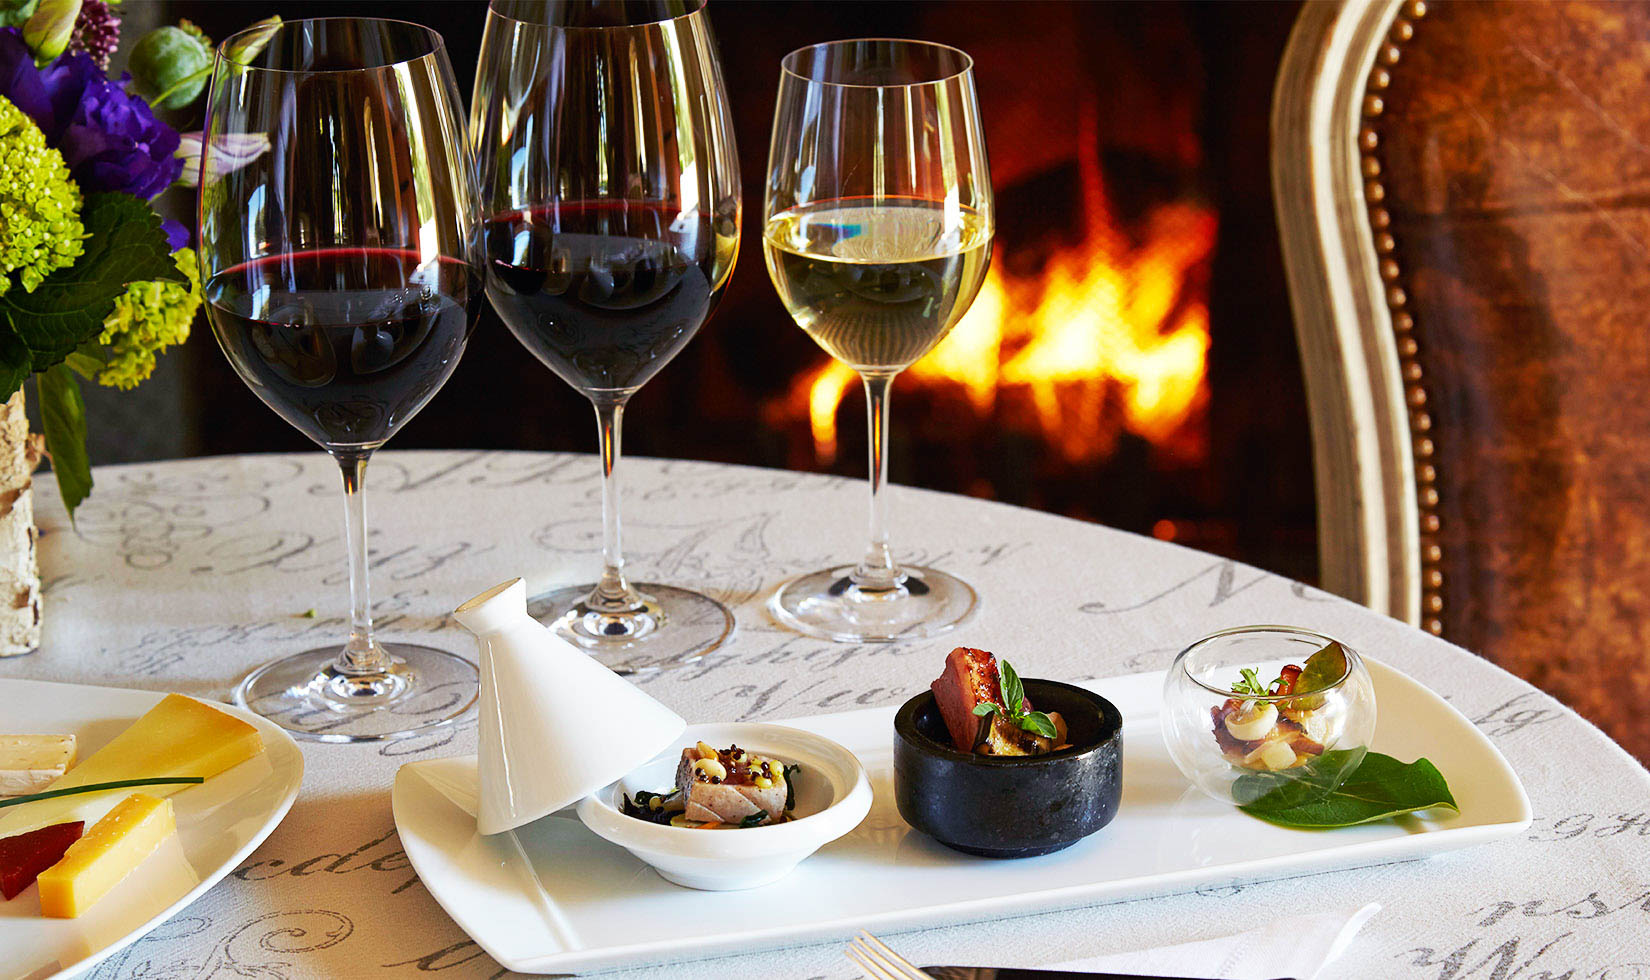 wine tasting with food pairing at Jordan, Jordan Winery loyalty program dining room table